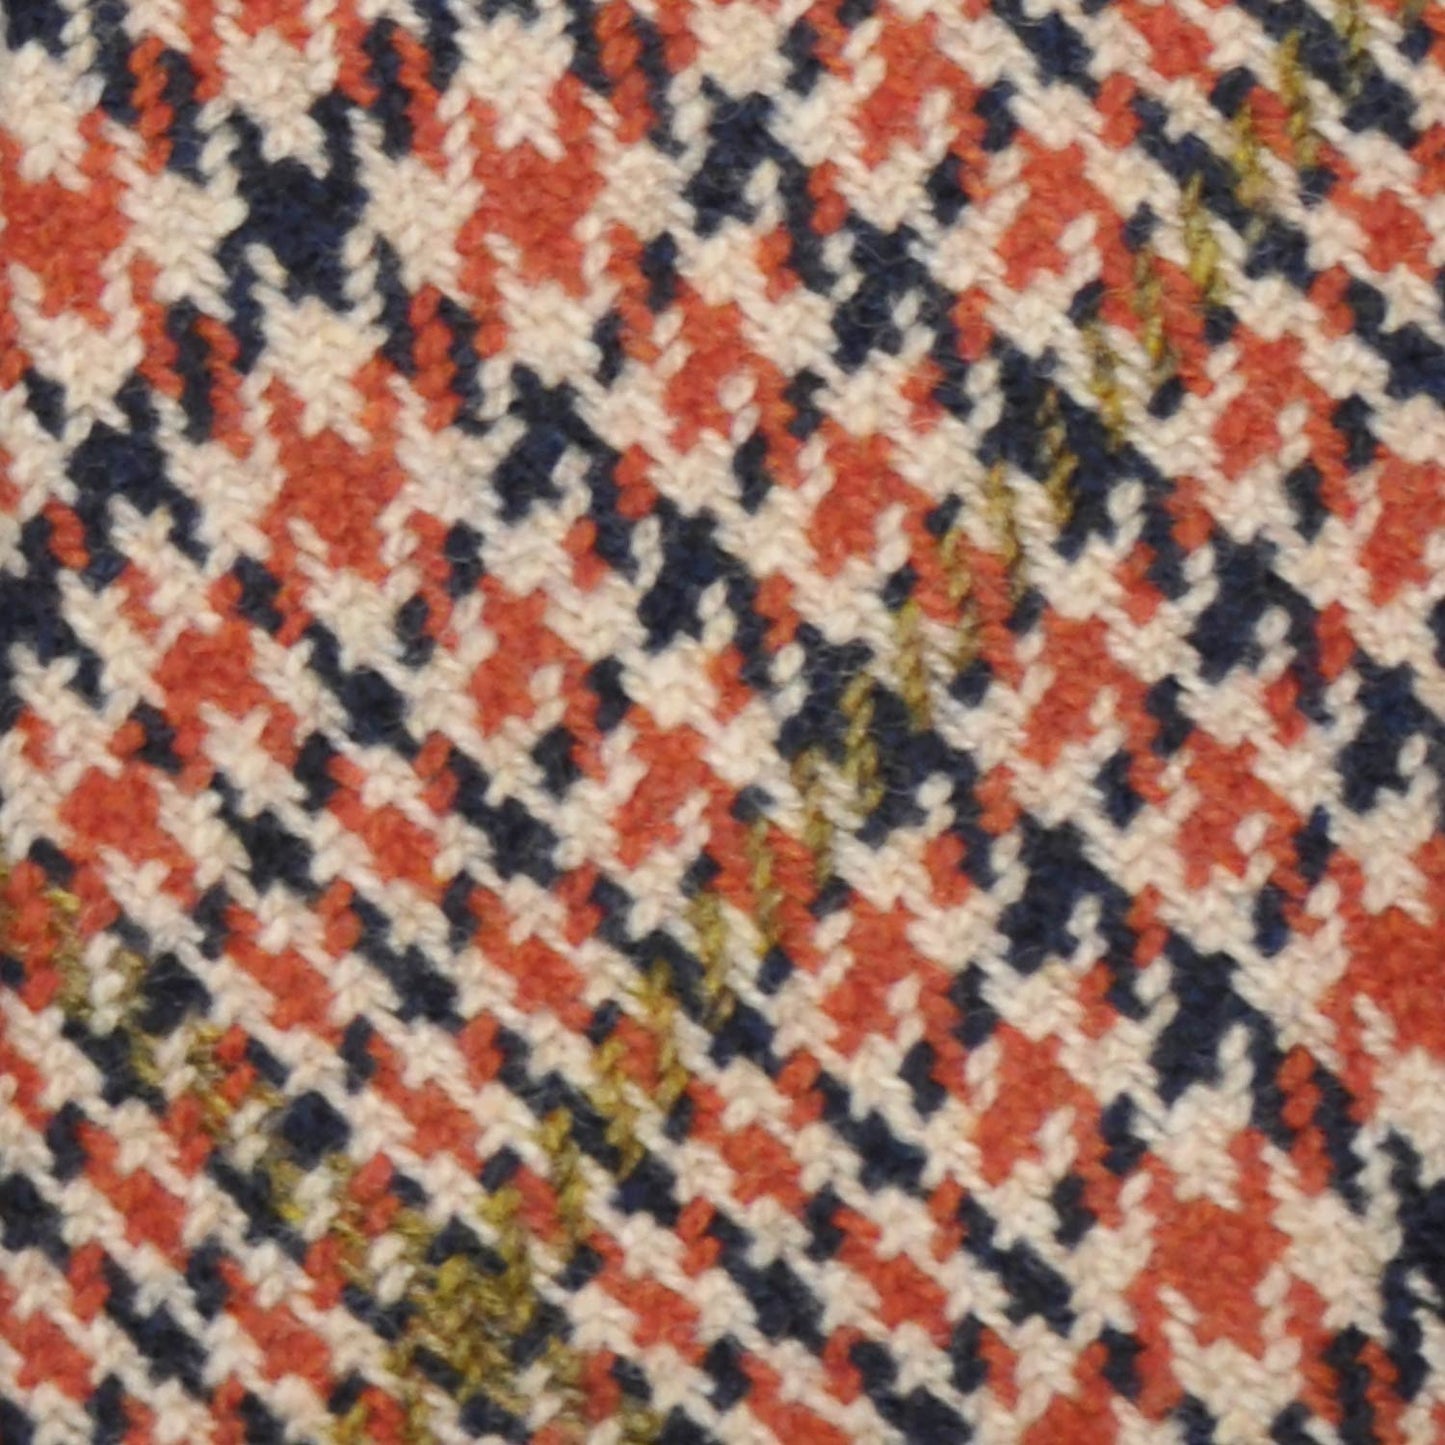 Load image into Gallery viewer, Orange Tweed Tie Handmade Unlined Houndstooth Pattern
